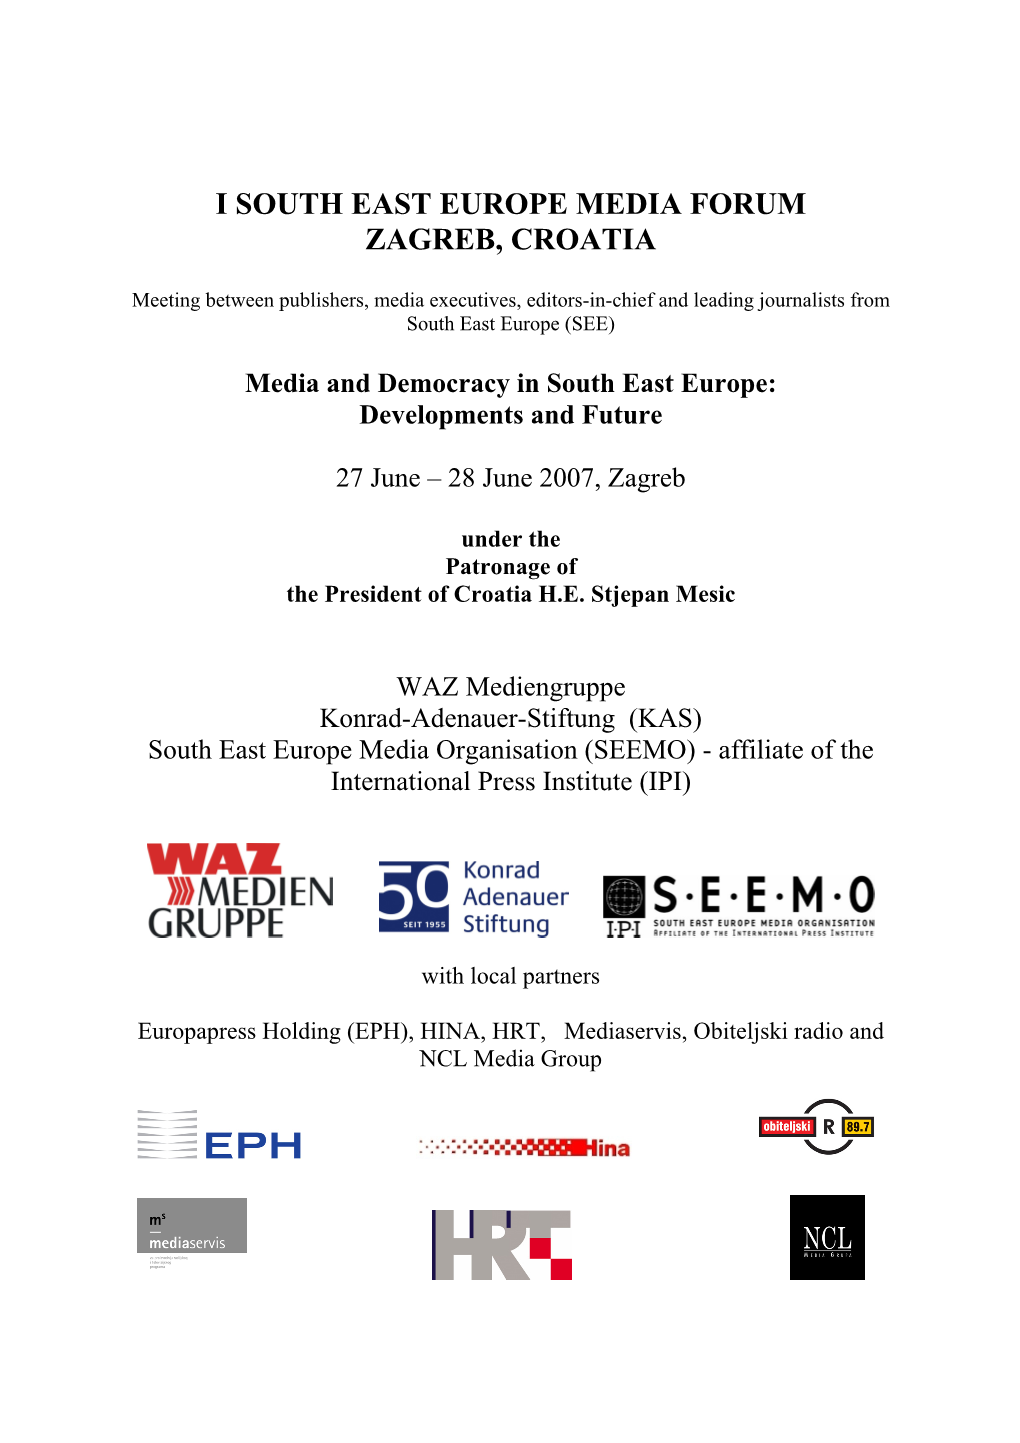 I South East Europe Media Forum Zagreb, Croatia